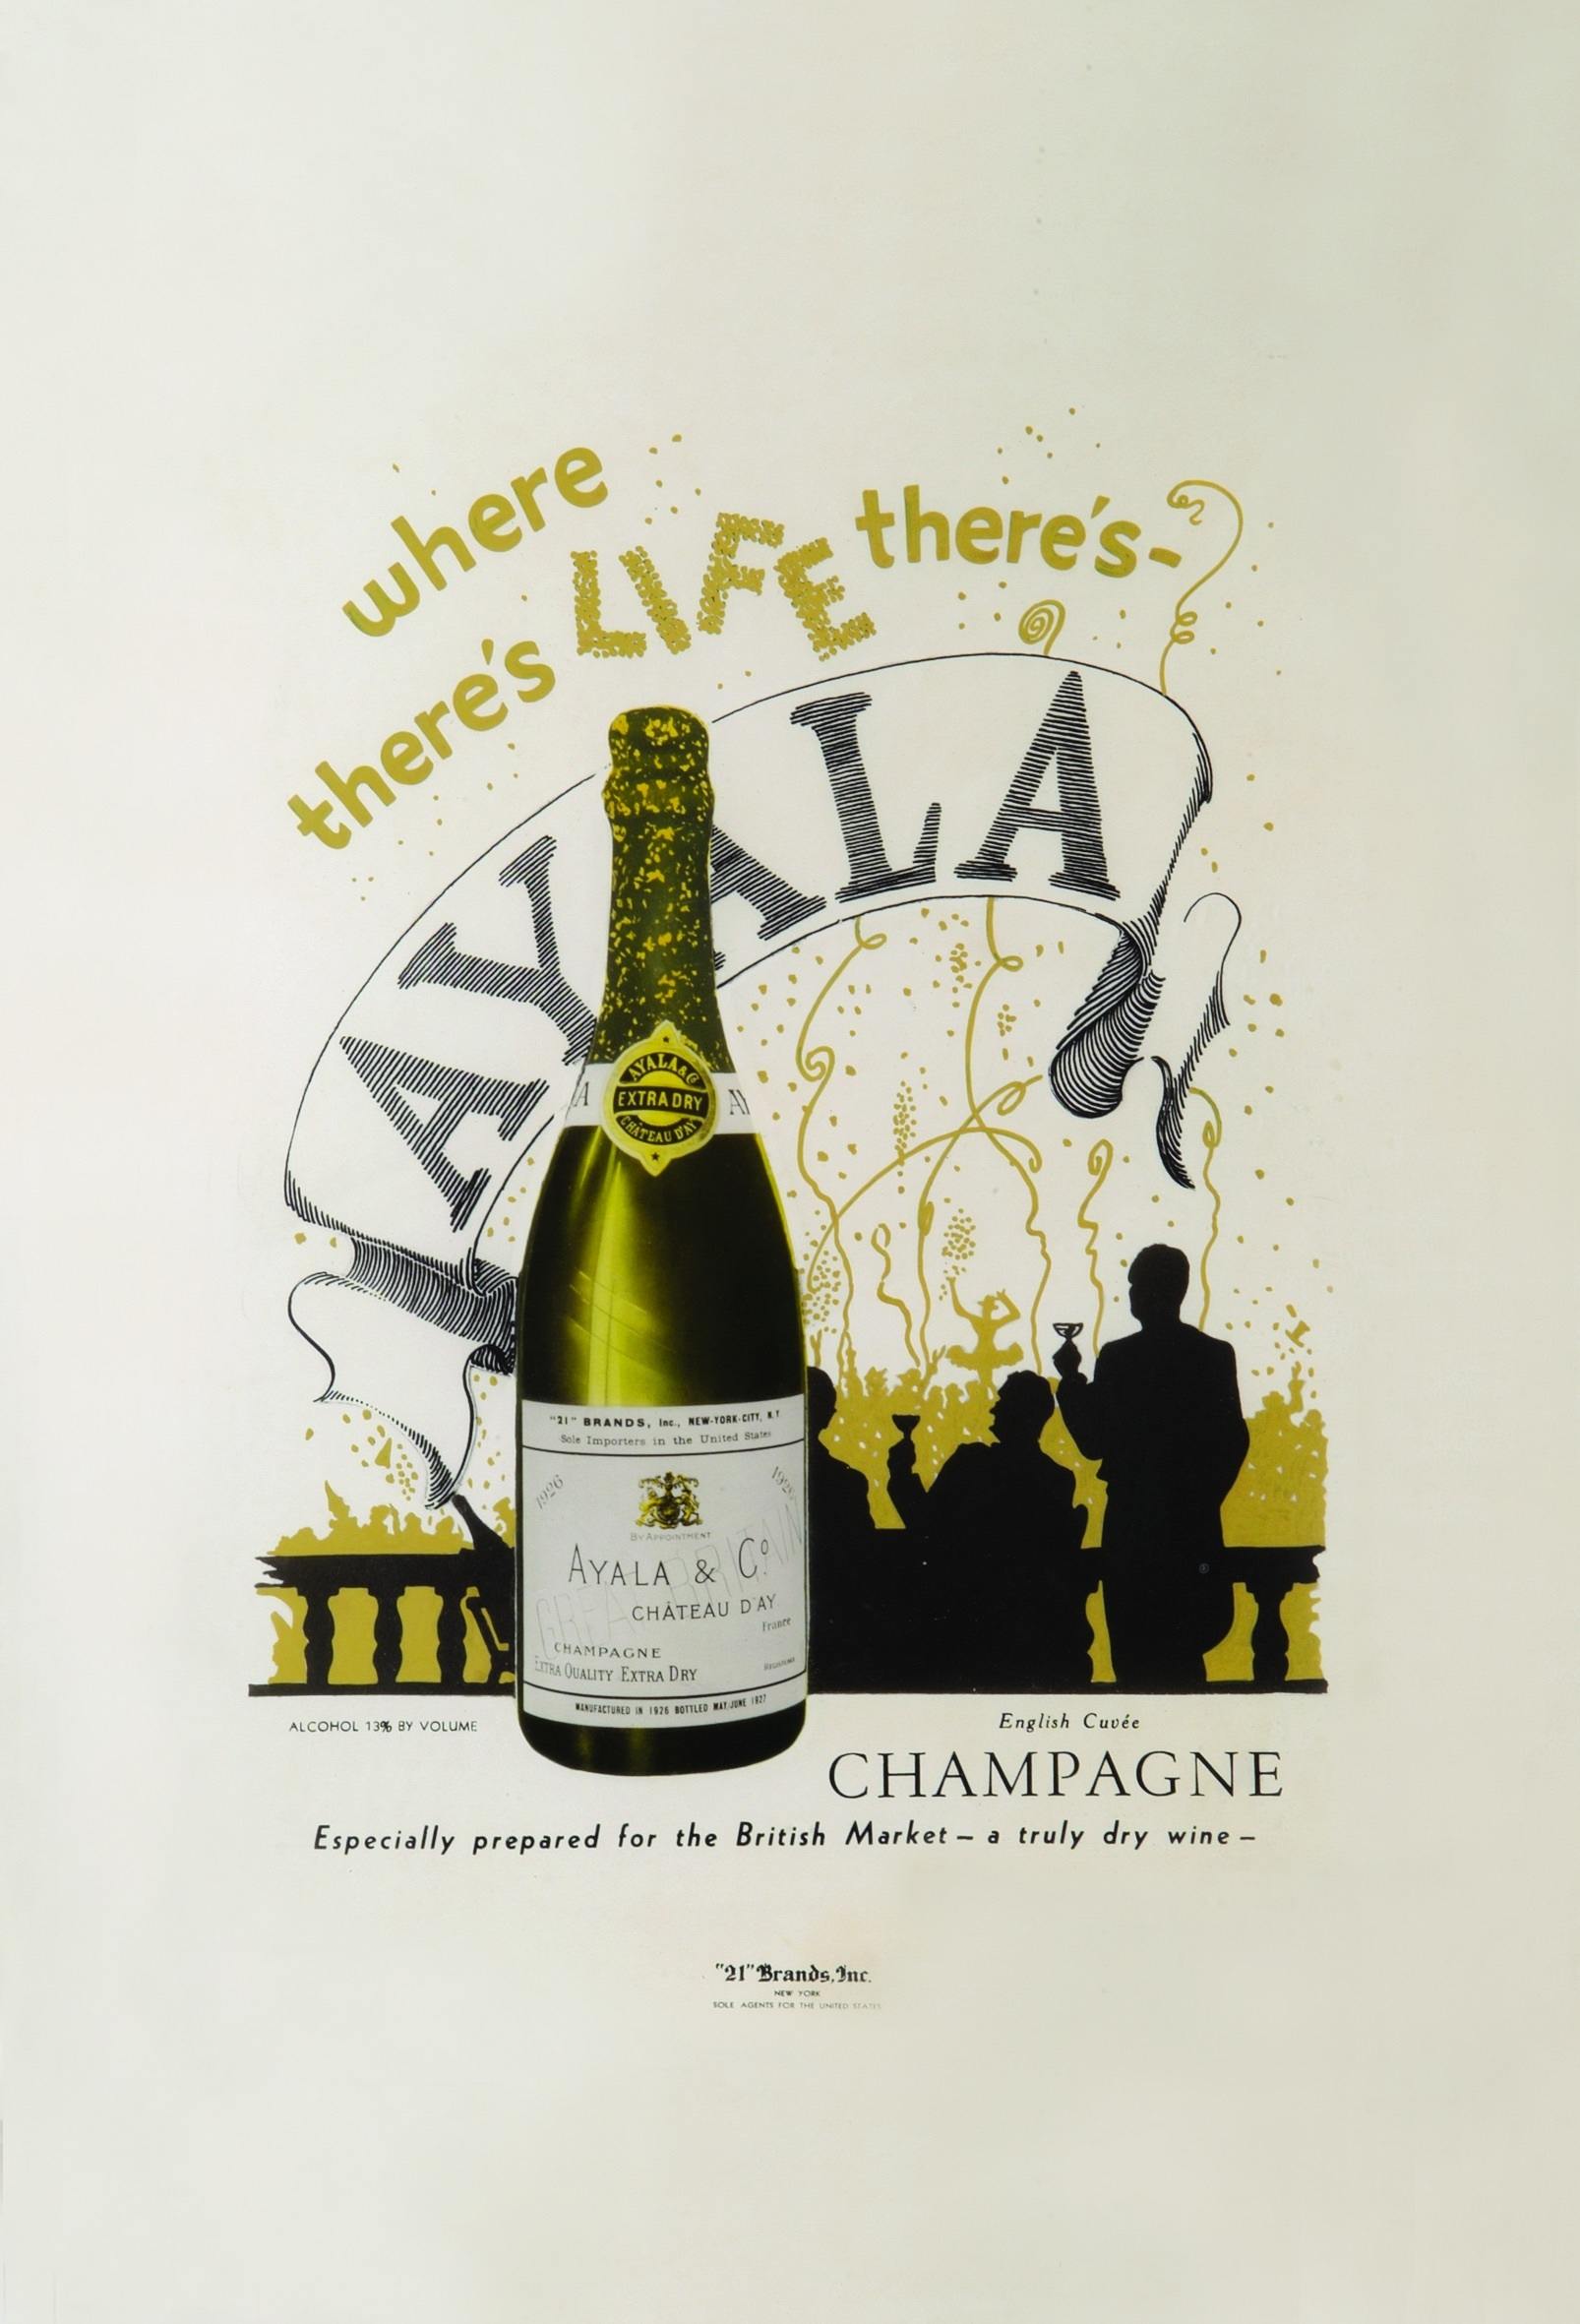 160 years of Heritage - Champagne Ayala